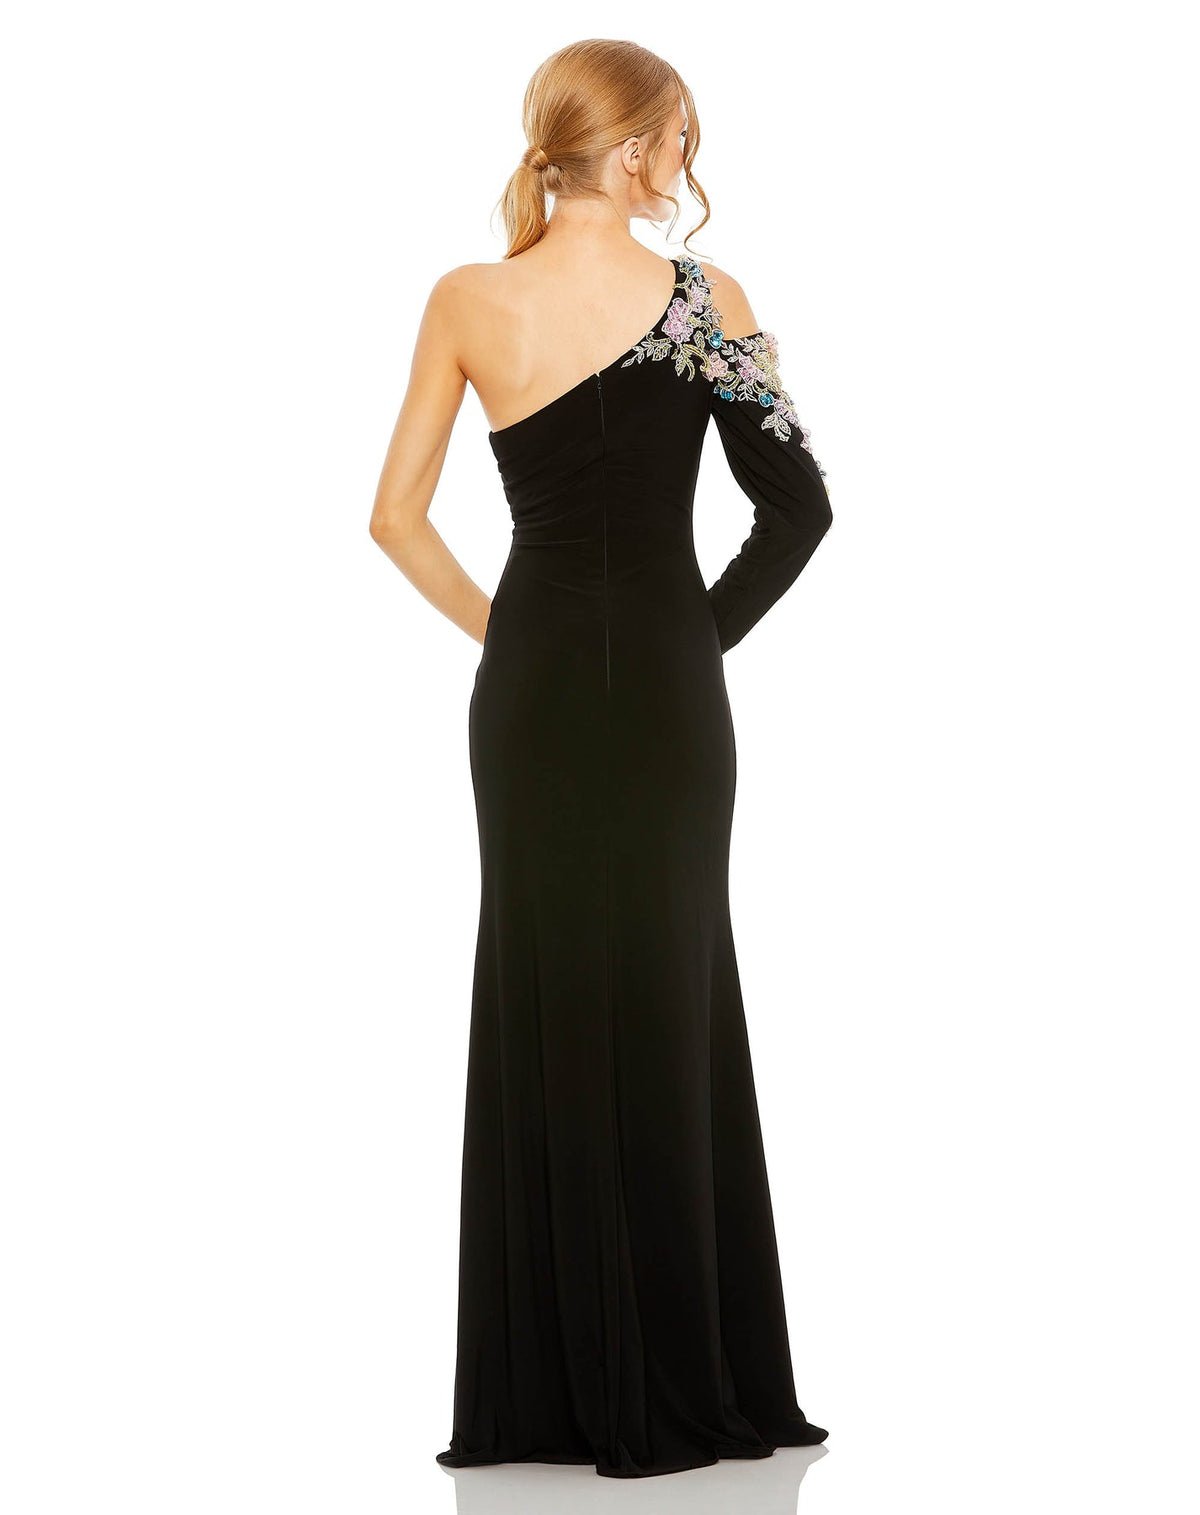 Mac Duggal Style # 2204 One shoulder long sleeve floral embellished gown - Black back view